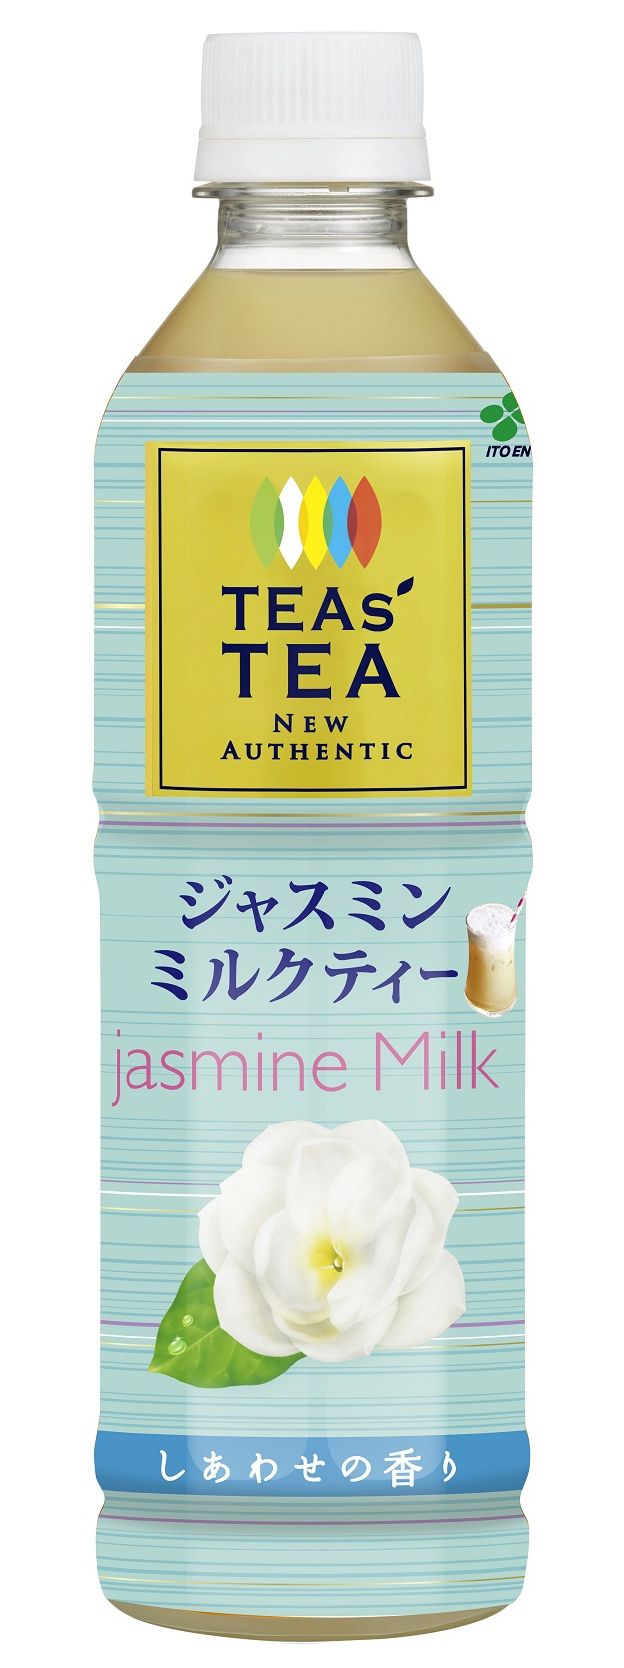 「TEAs’ TEA NEW AUTHENTIC ジャスミンミルクティー」5月8日（月）より販売開始 | 伊藤園 企業情報サイト